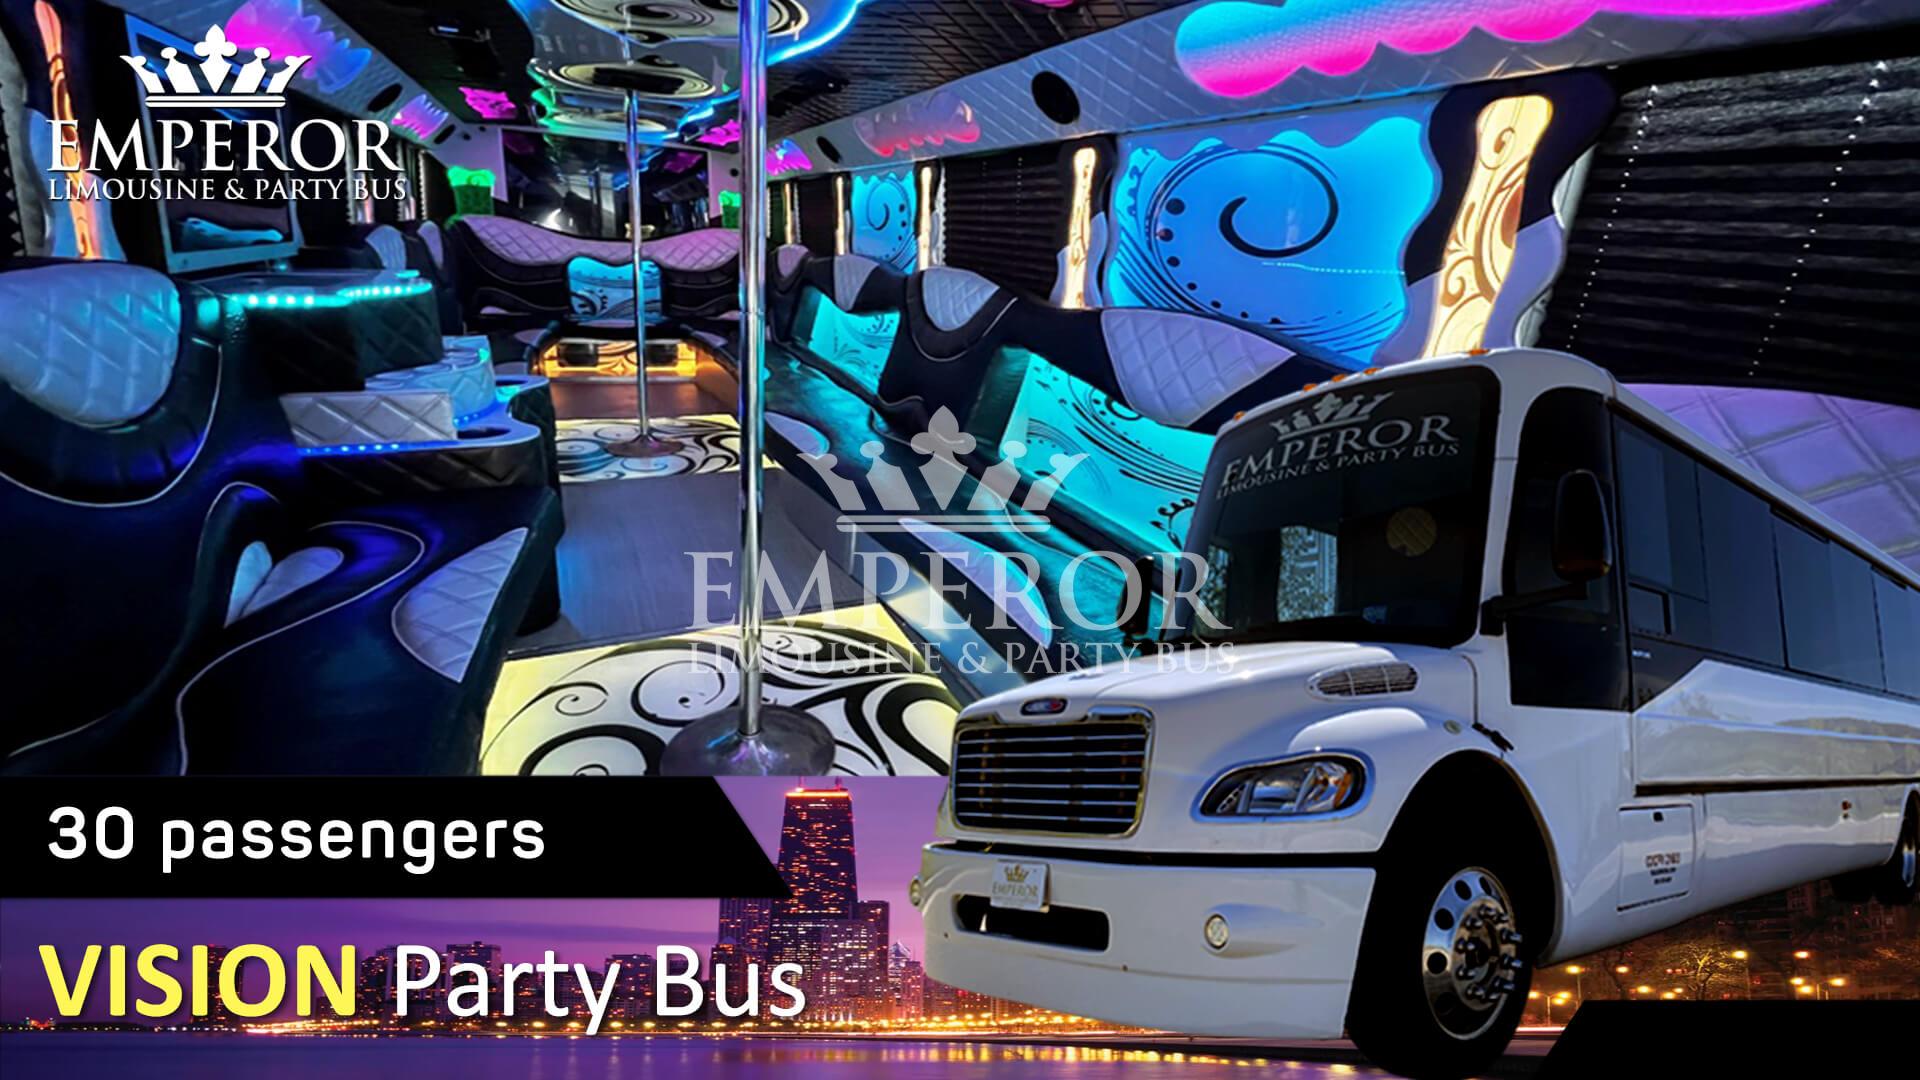 Bedford Park party bus - Vision Edition